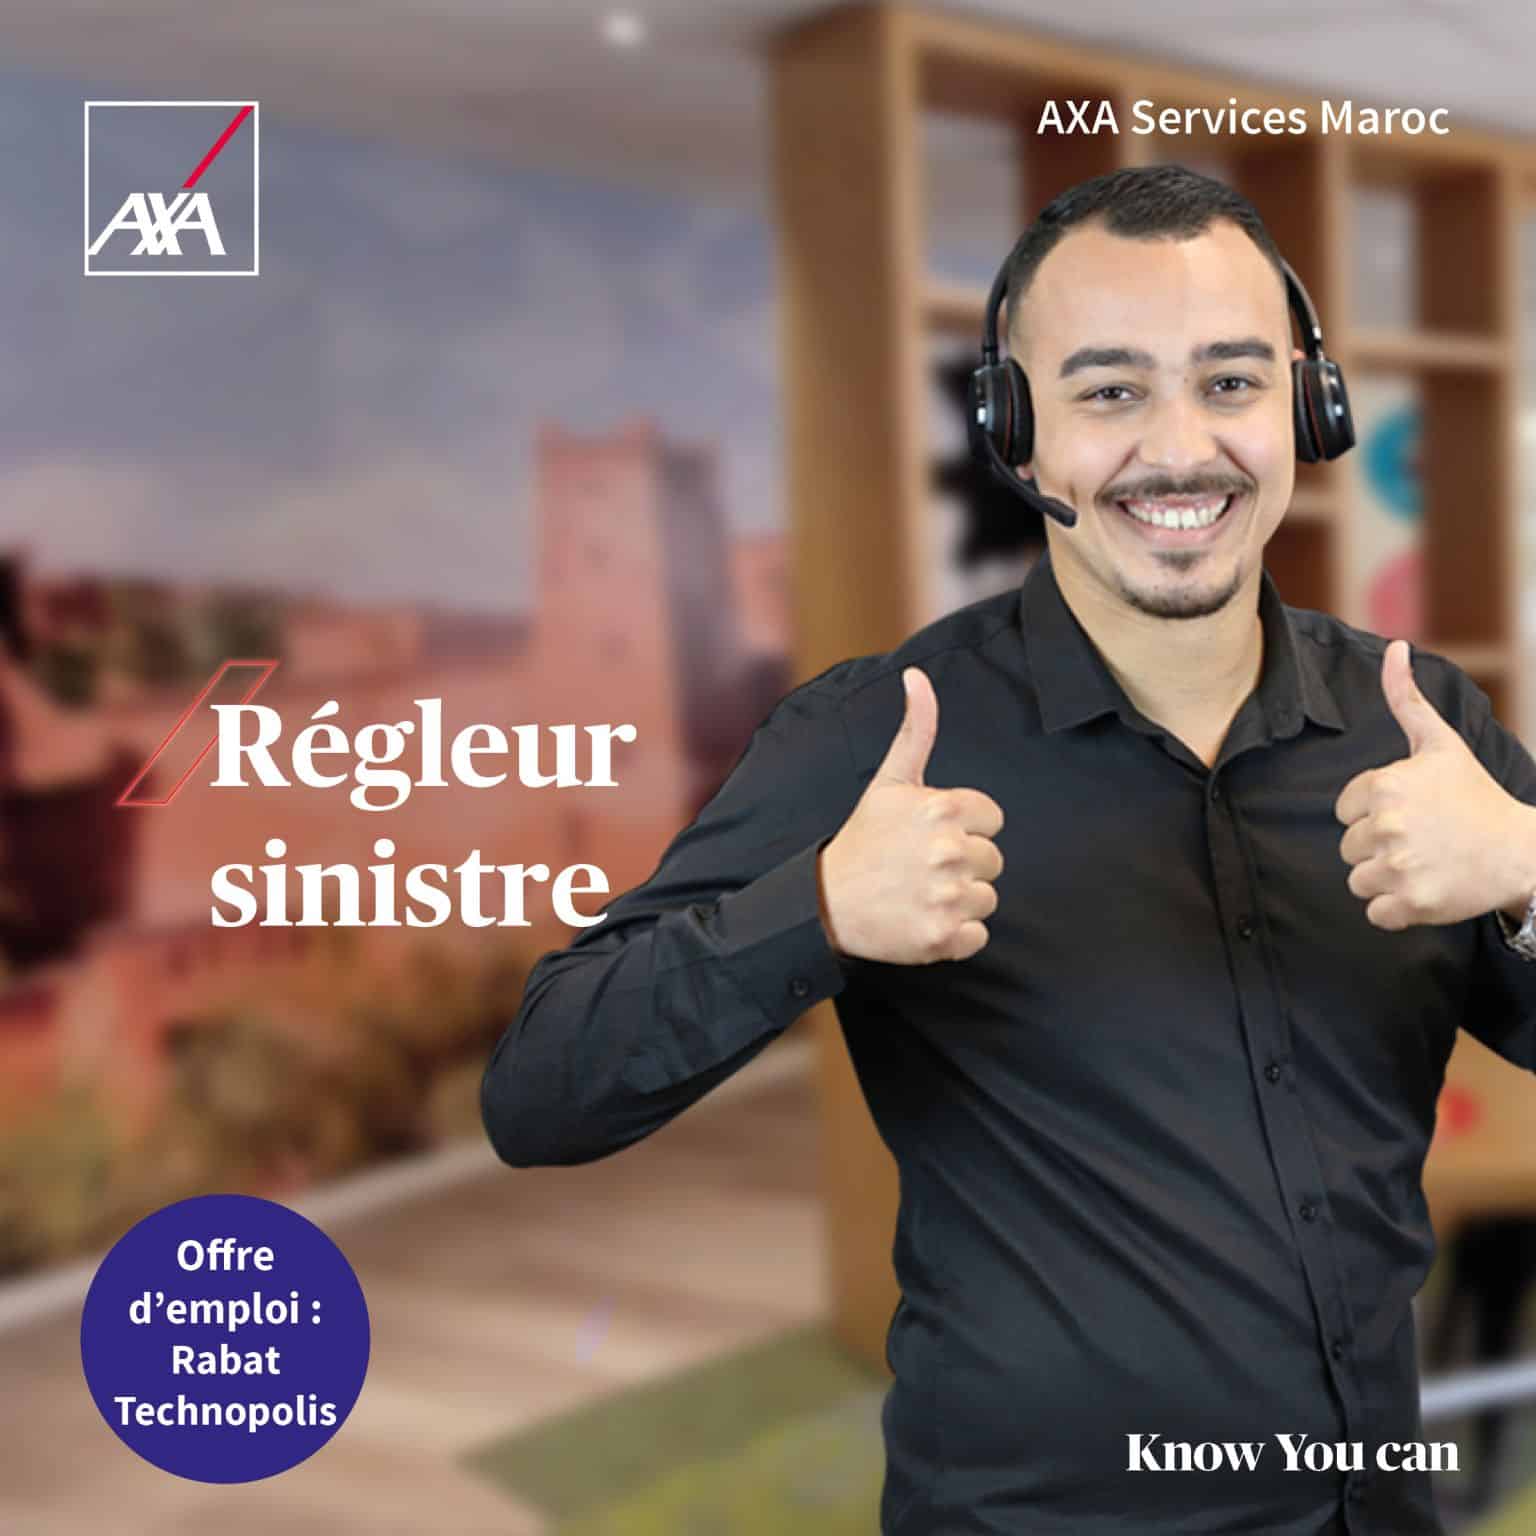 AXA Services Maroc recrute des Régleurs Sinistres